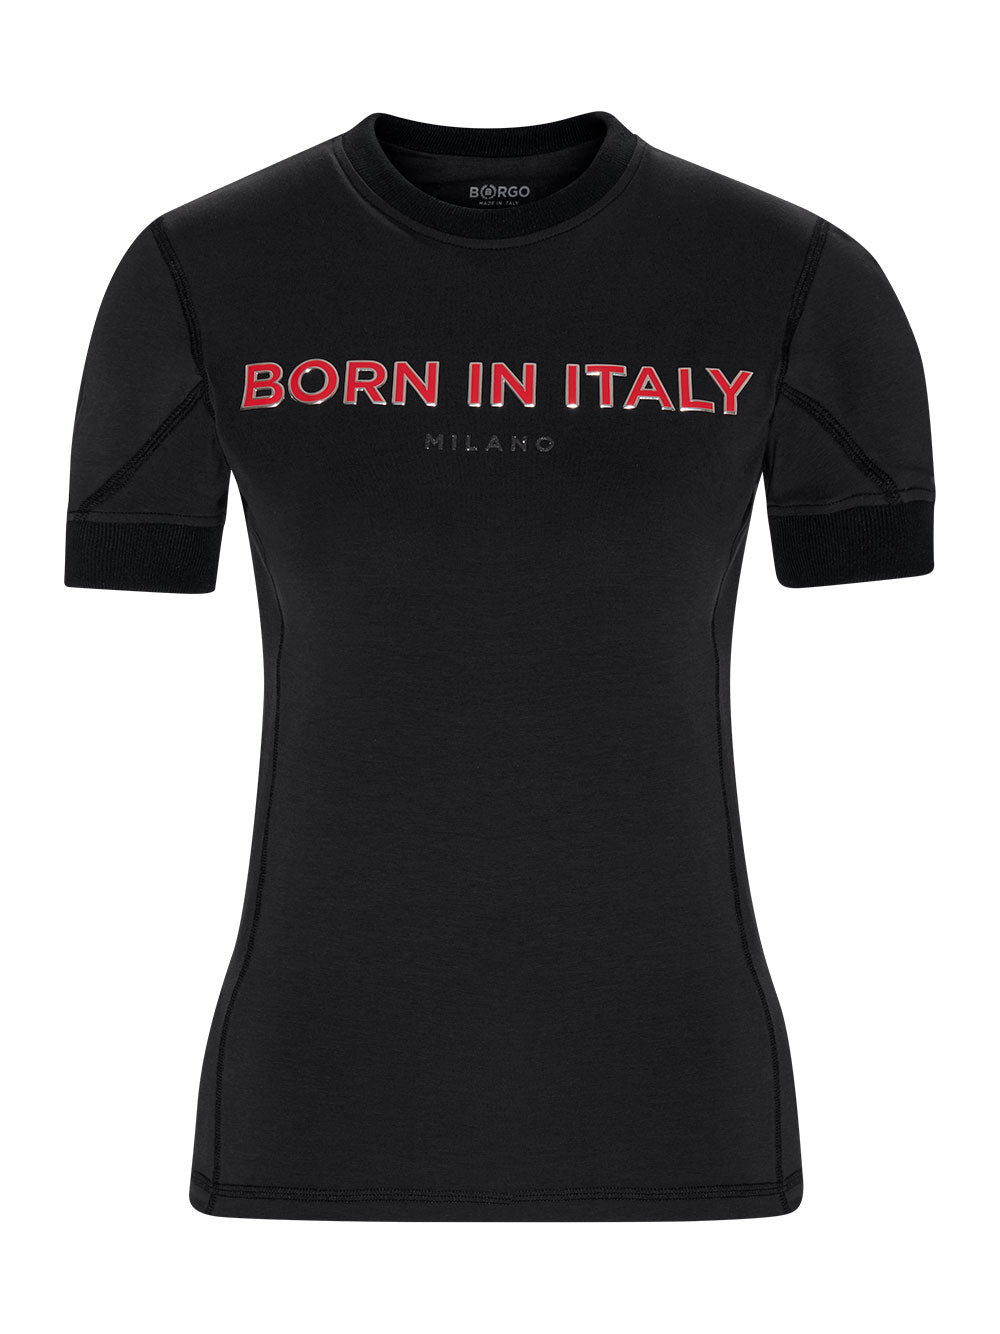 BORGO Fiorano Nero T-Shirt